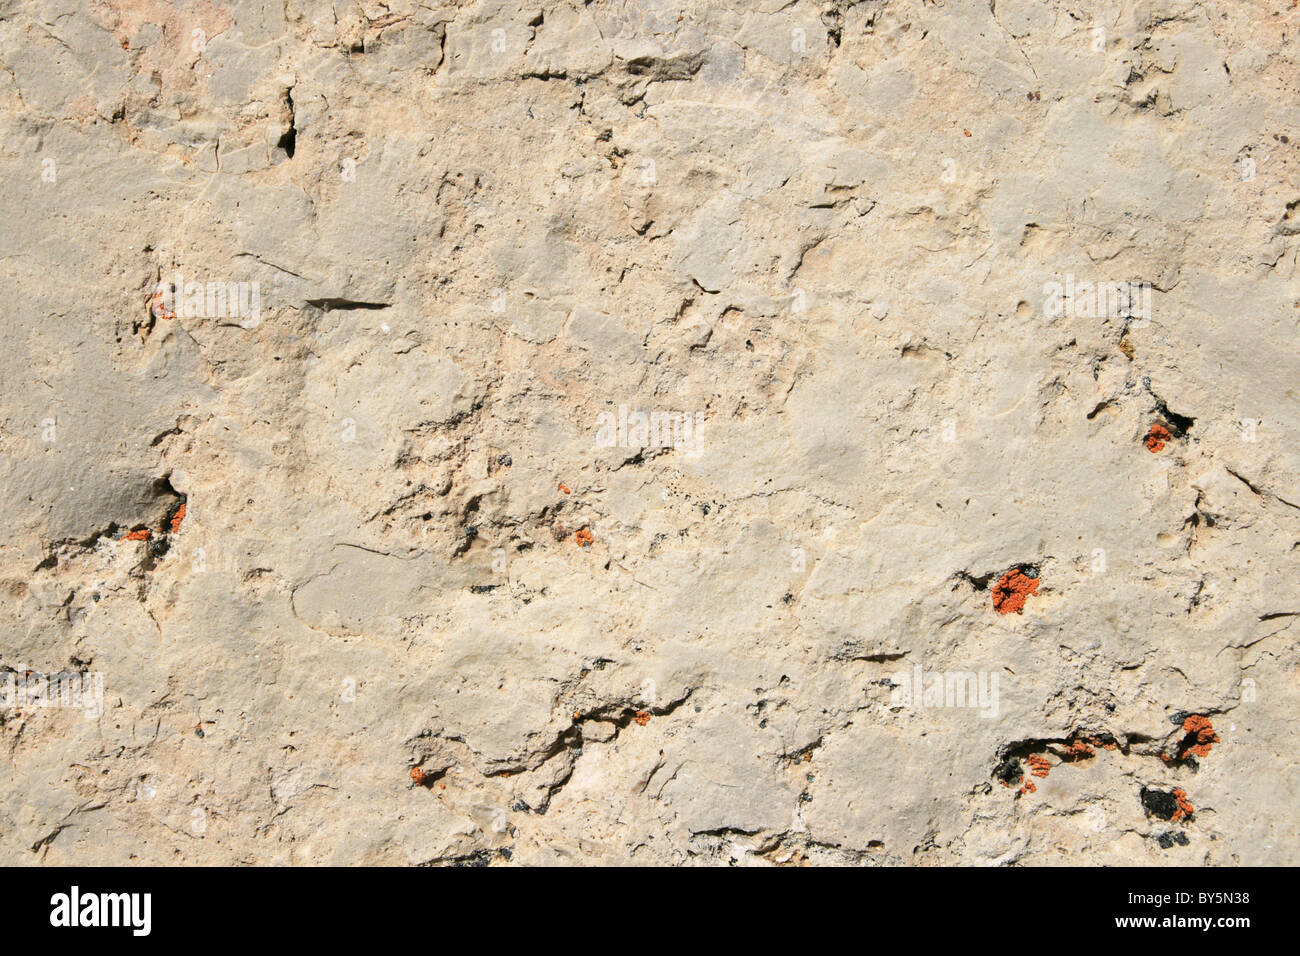 cracked white dolomite rock background with orange lichen spots Stock Photo